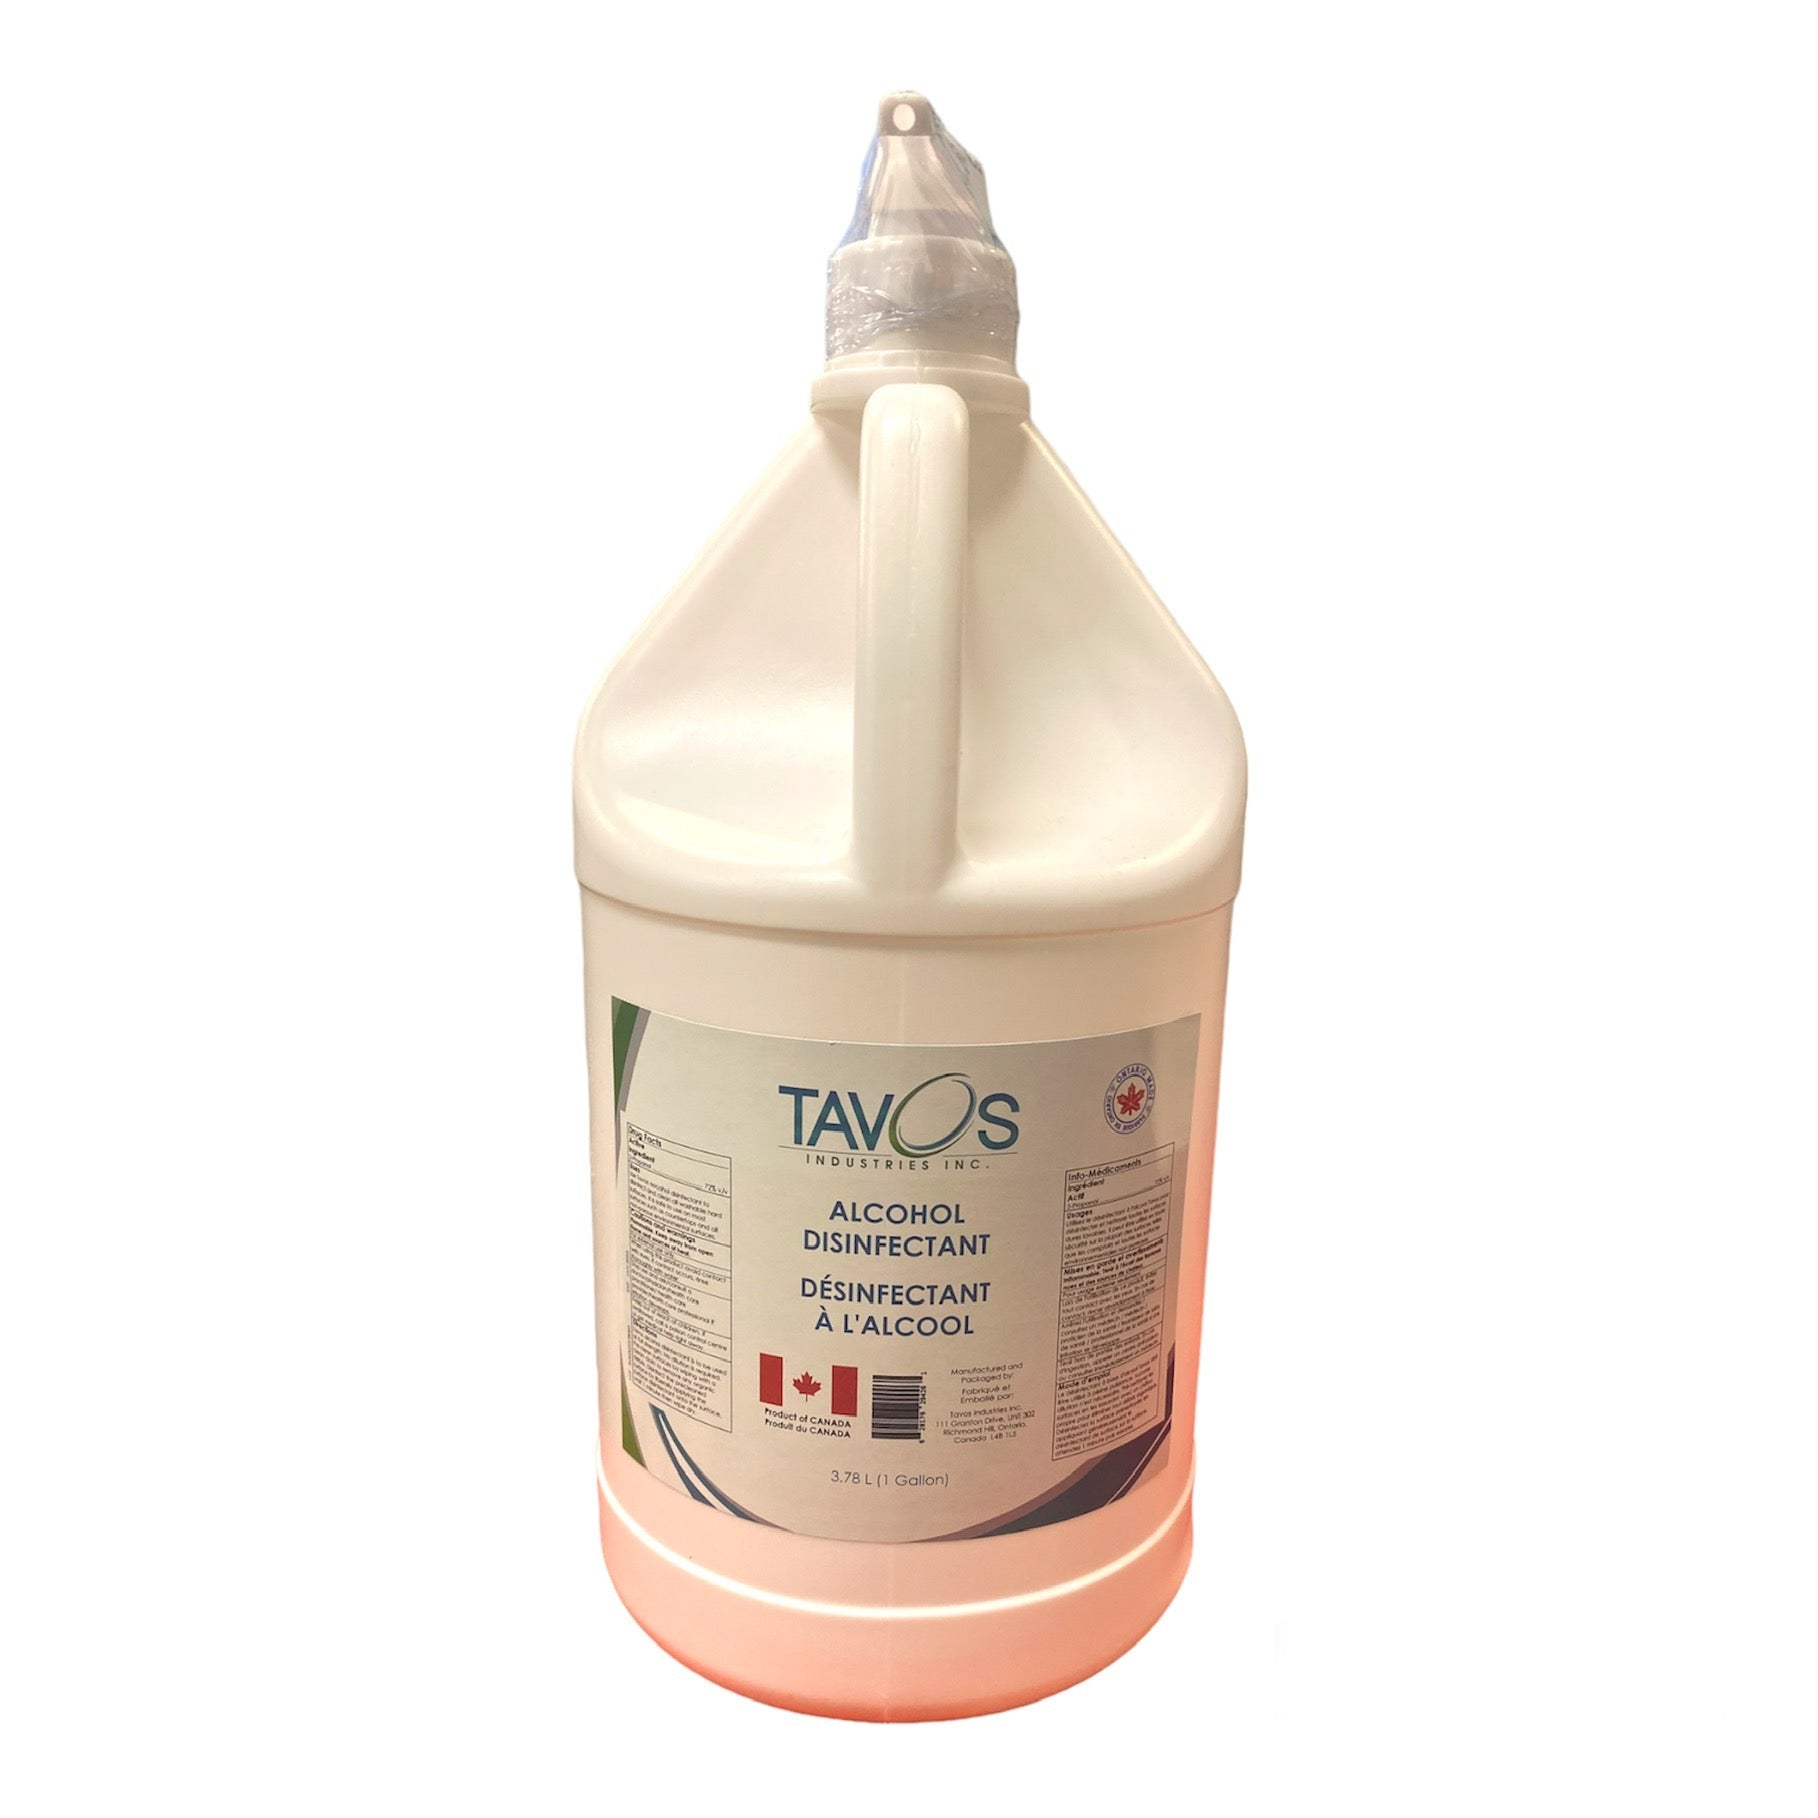 Tavos-Alcohol-Disinfectant-72%